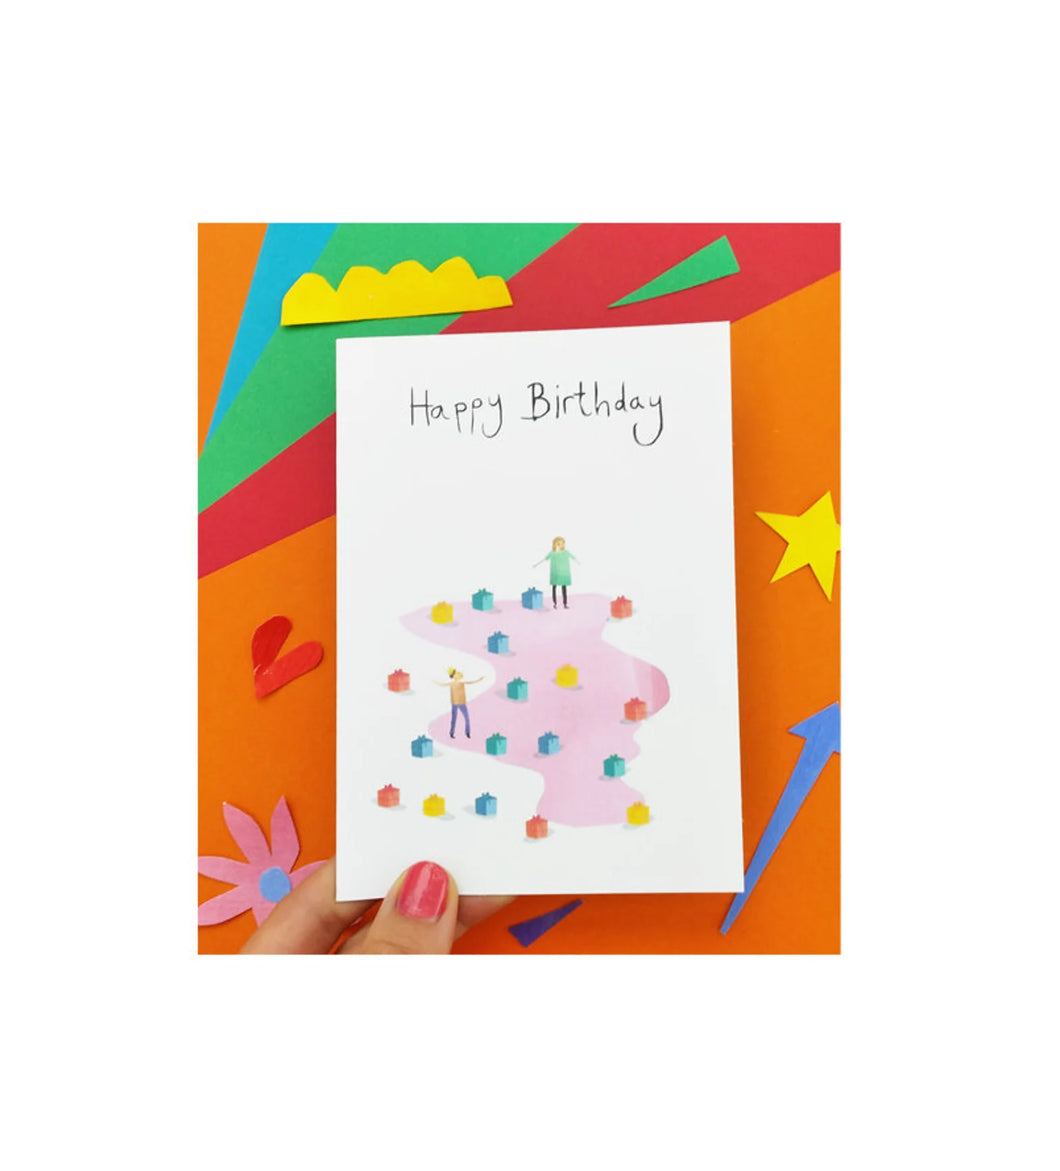 Happy Birthday - Greetings Card - Illustrator Kate